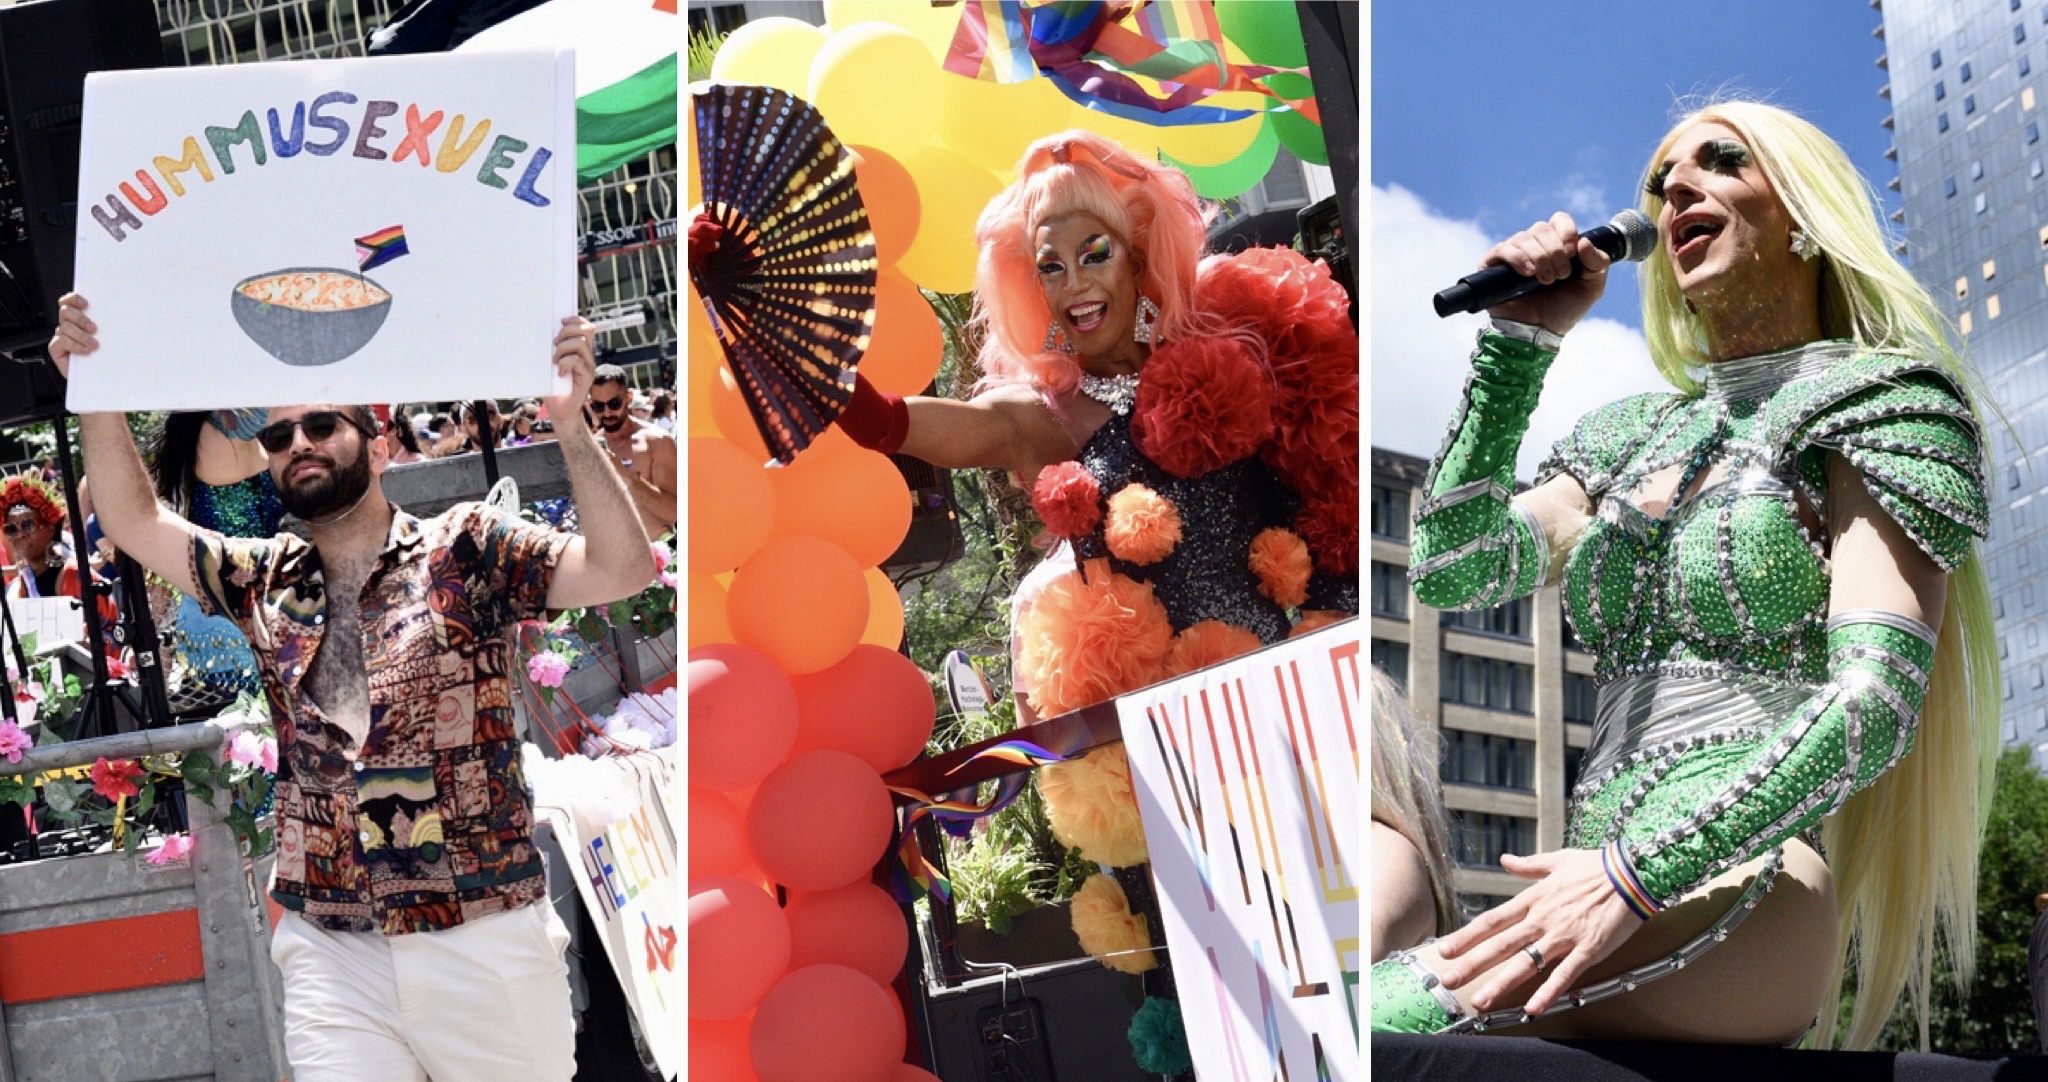 PHOTOS: The Montreal Pride Parade made a spectacular comeback